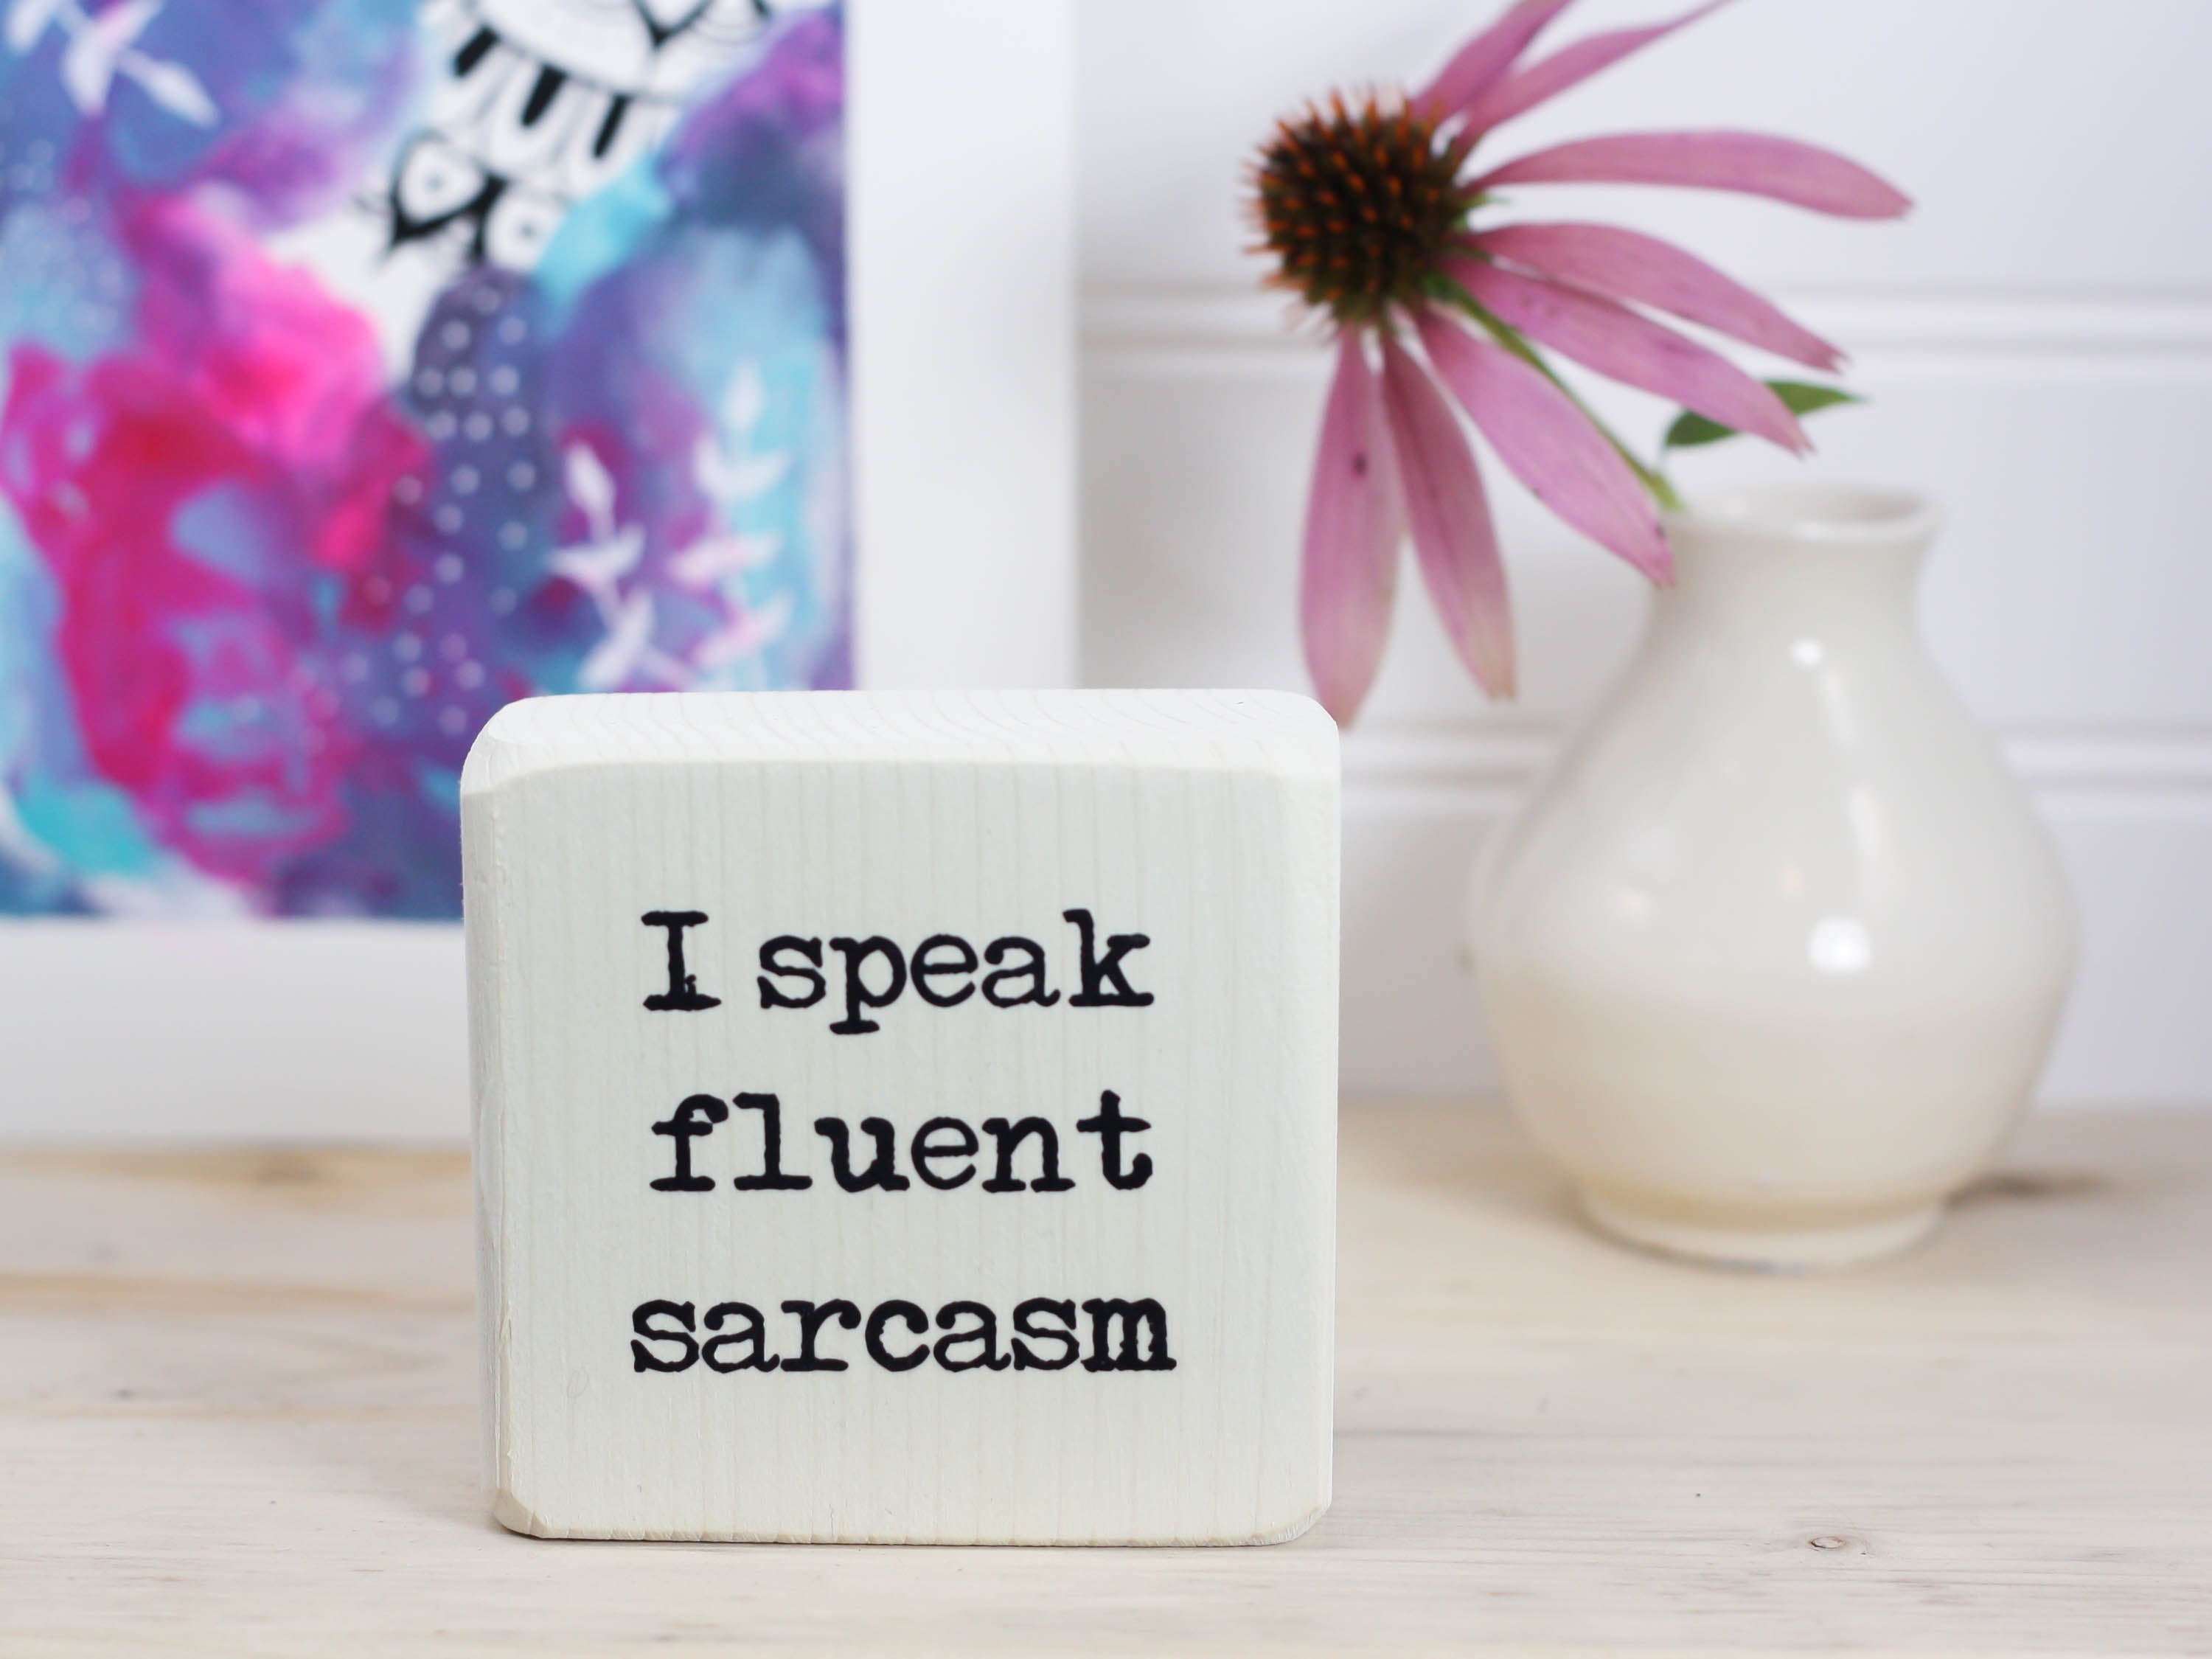 Mini wood sign in whitewash with the saying "I speak fluent sarcasm".